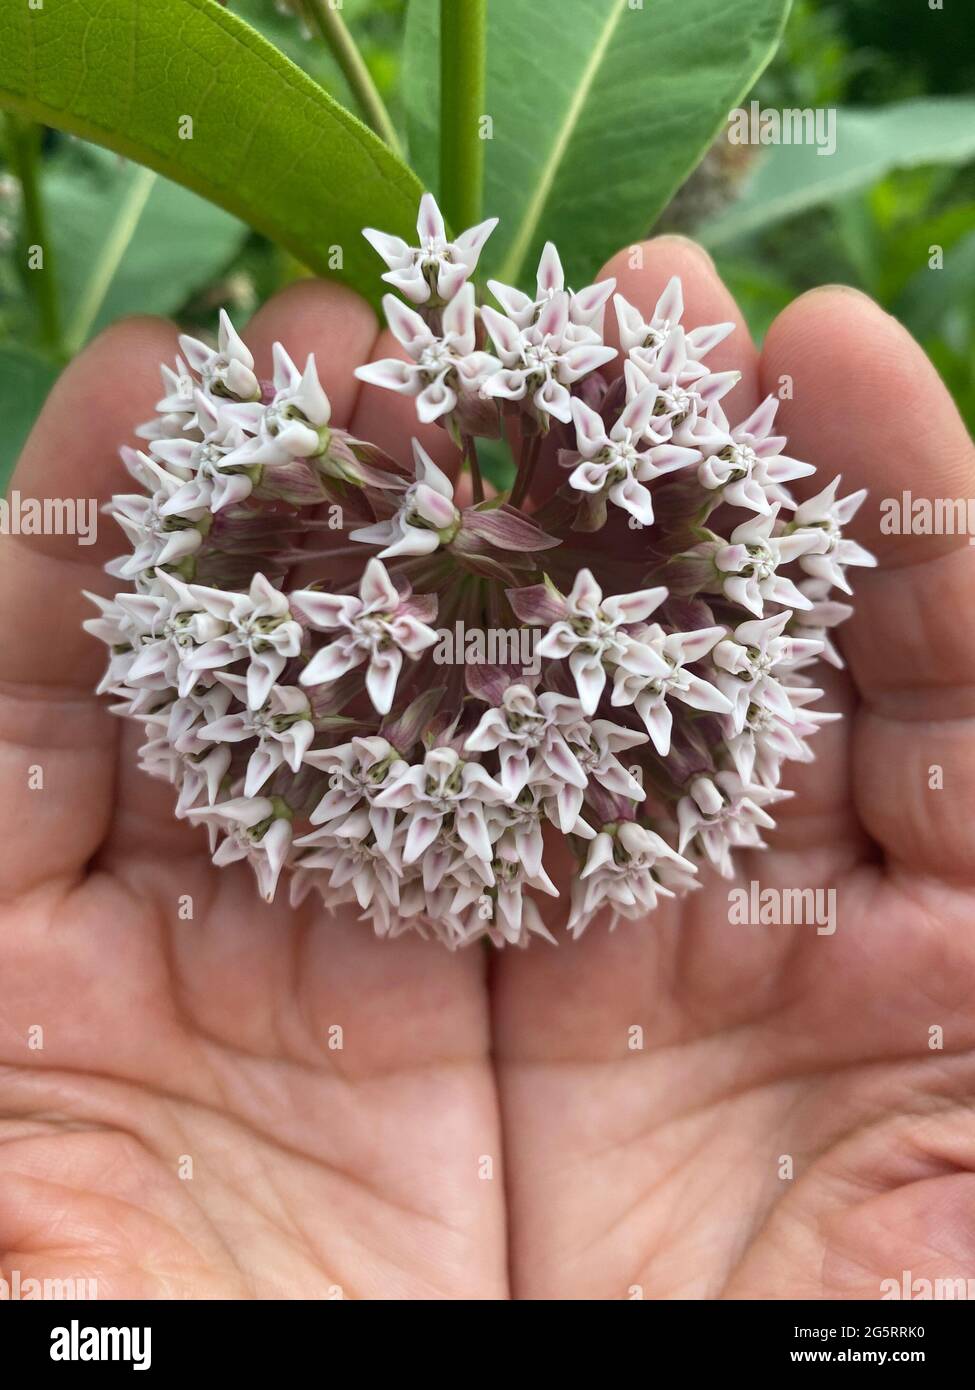 Common Milkweed flower, Stock Photo